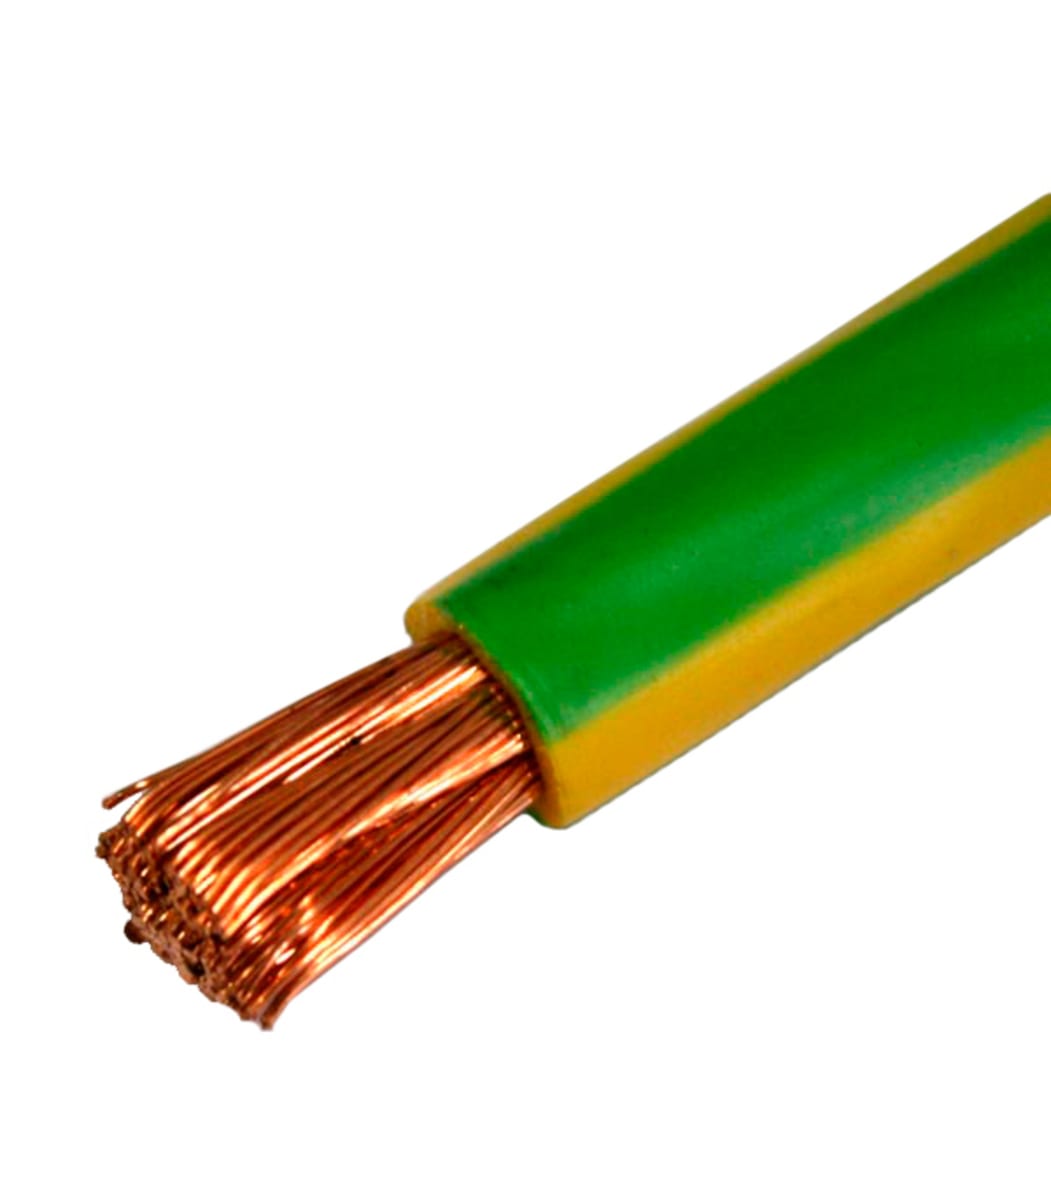 Пв 1.3. ПУГВ 1х16 провод. ПУГВ 1х10 провод. Провод пв3 1х10 кв. мм (желто-зеленый). Провод ПУГВ 1х16 желто-зеленый.